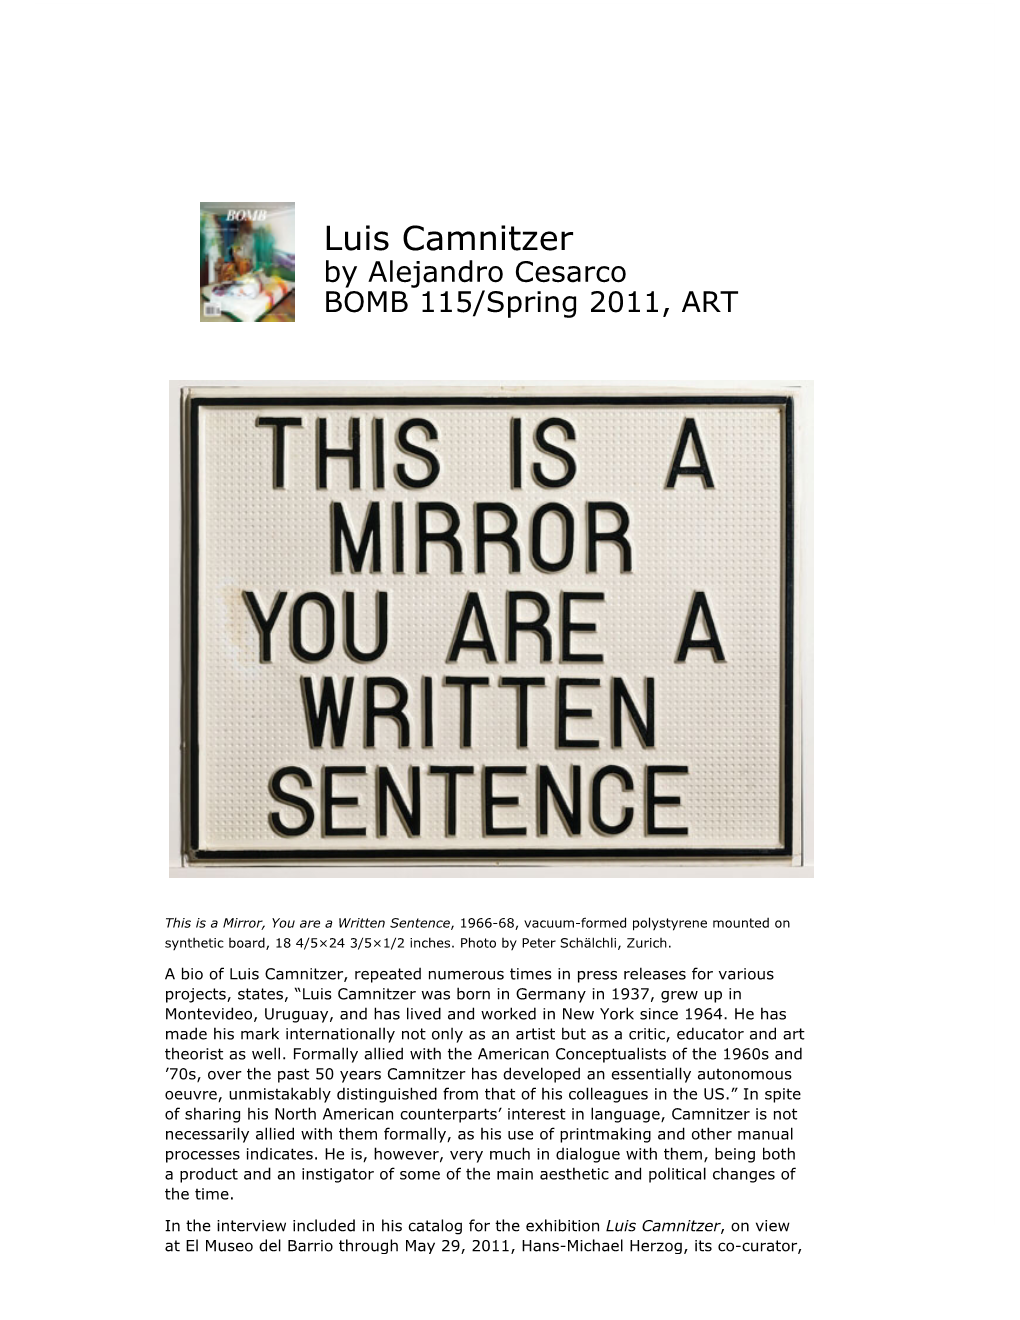 Luis Camnitzer by Alejandro Cesarco BOMB 115/Spring 2011, ART